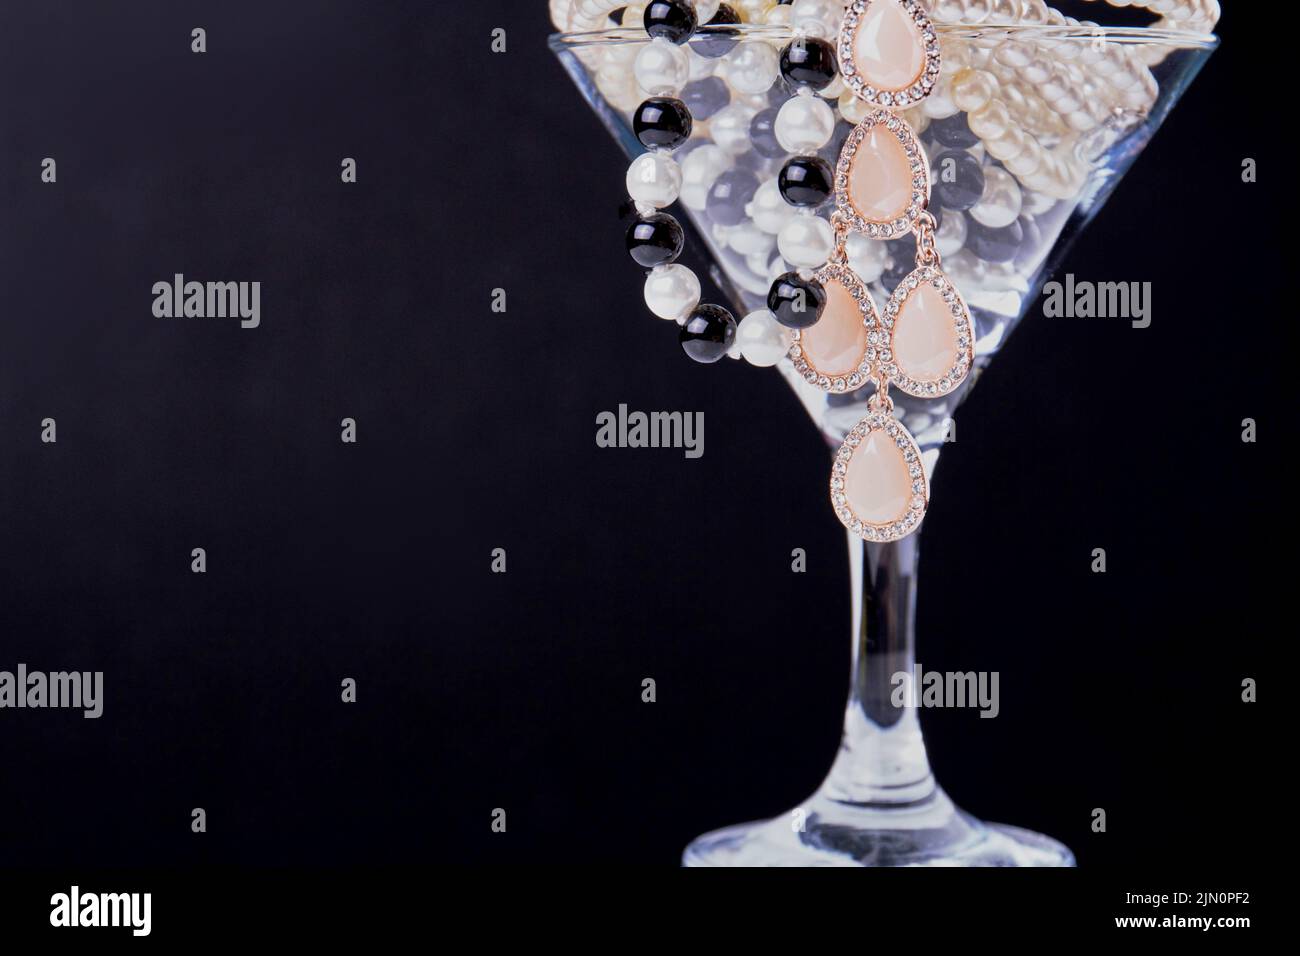 Primer plano copa de cóctel llena de perlas sobre fondo oscuro. Taza rellena de joyas. Foto de stock